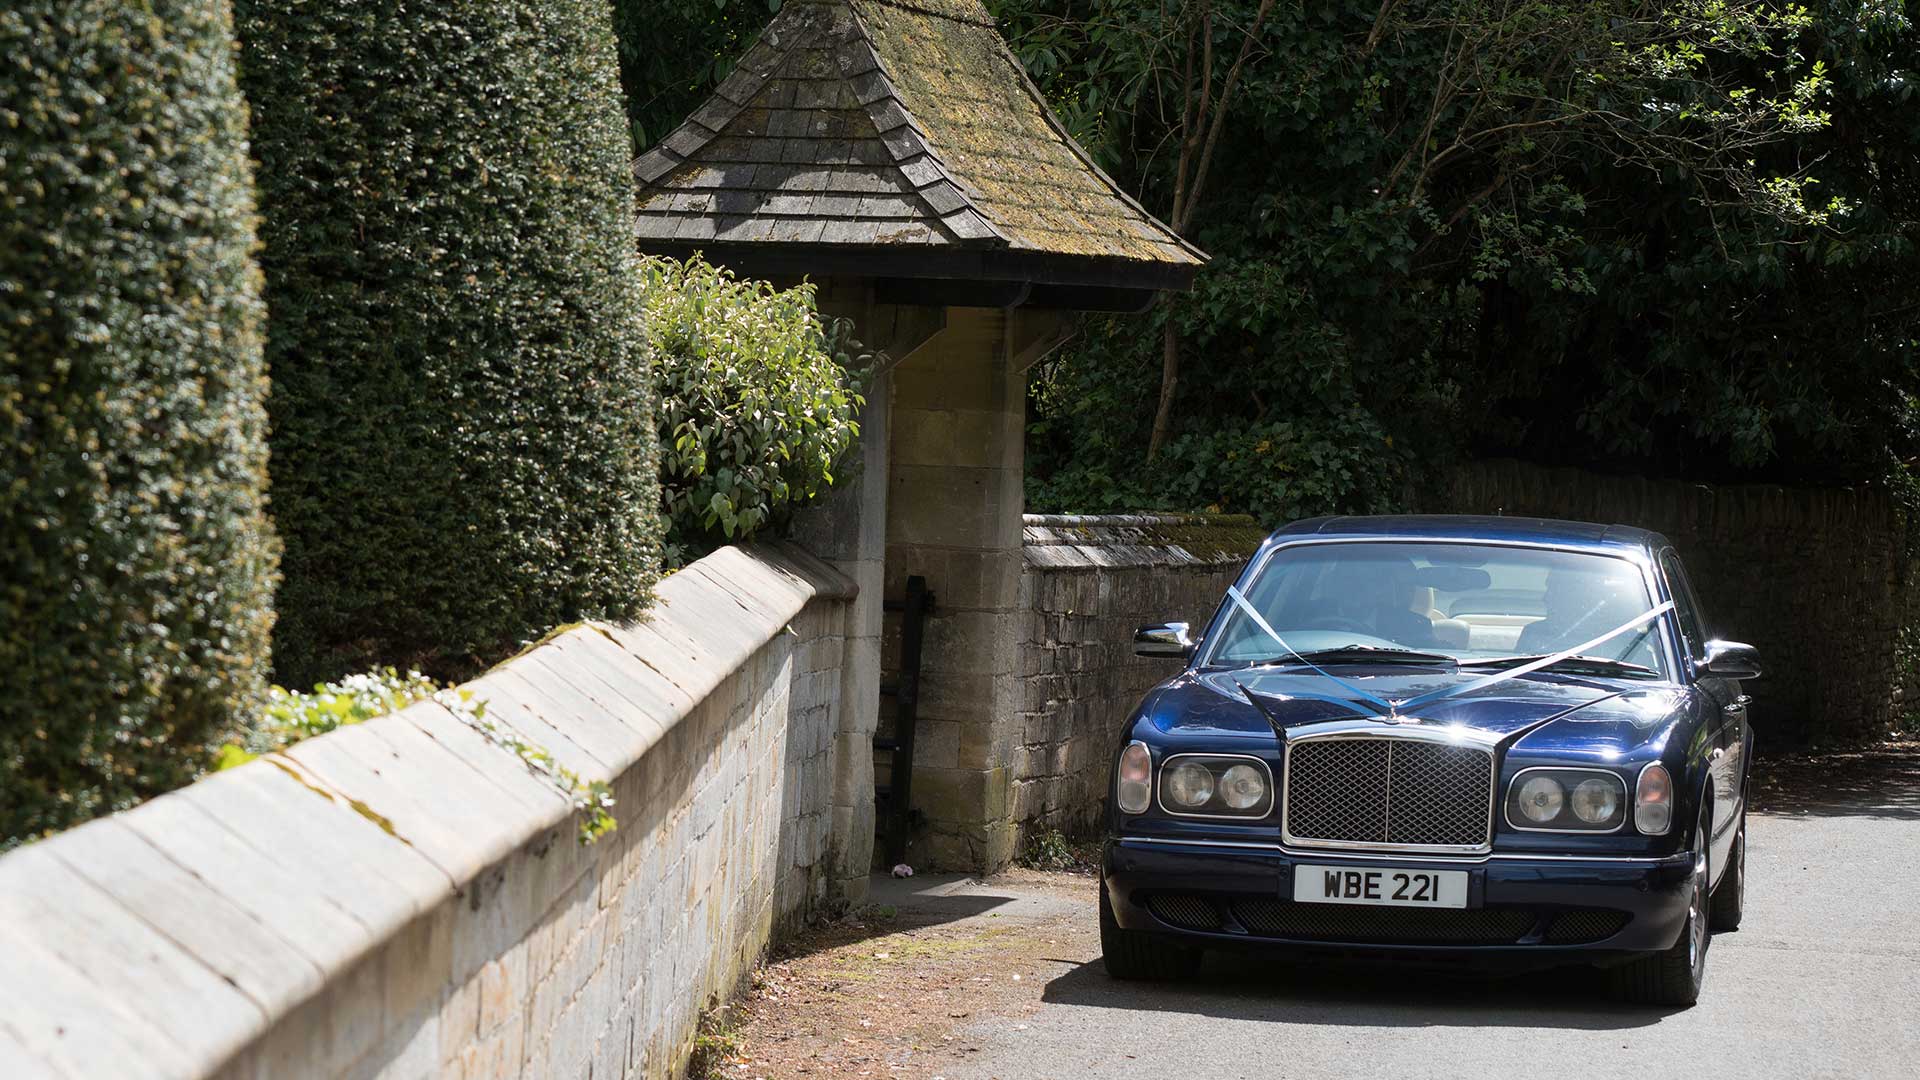 The Bentley Arnage wedding car in blue